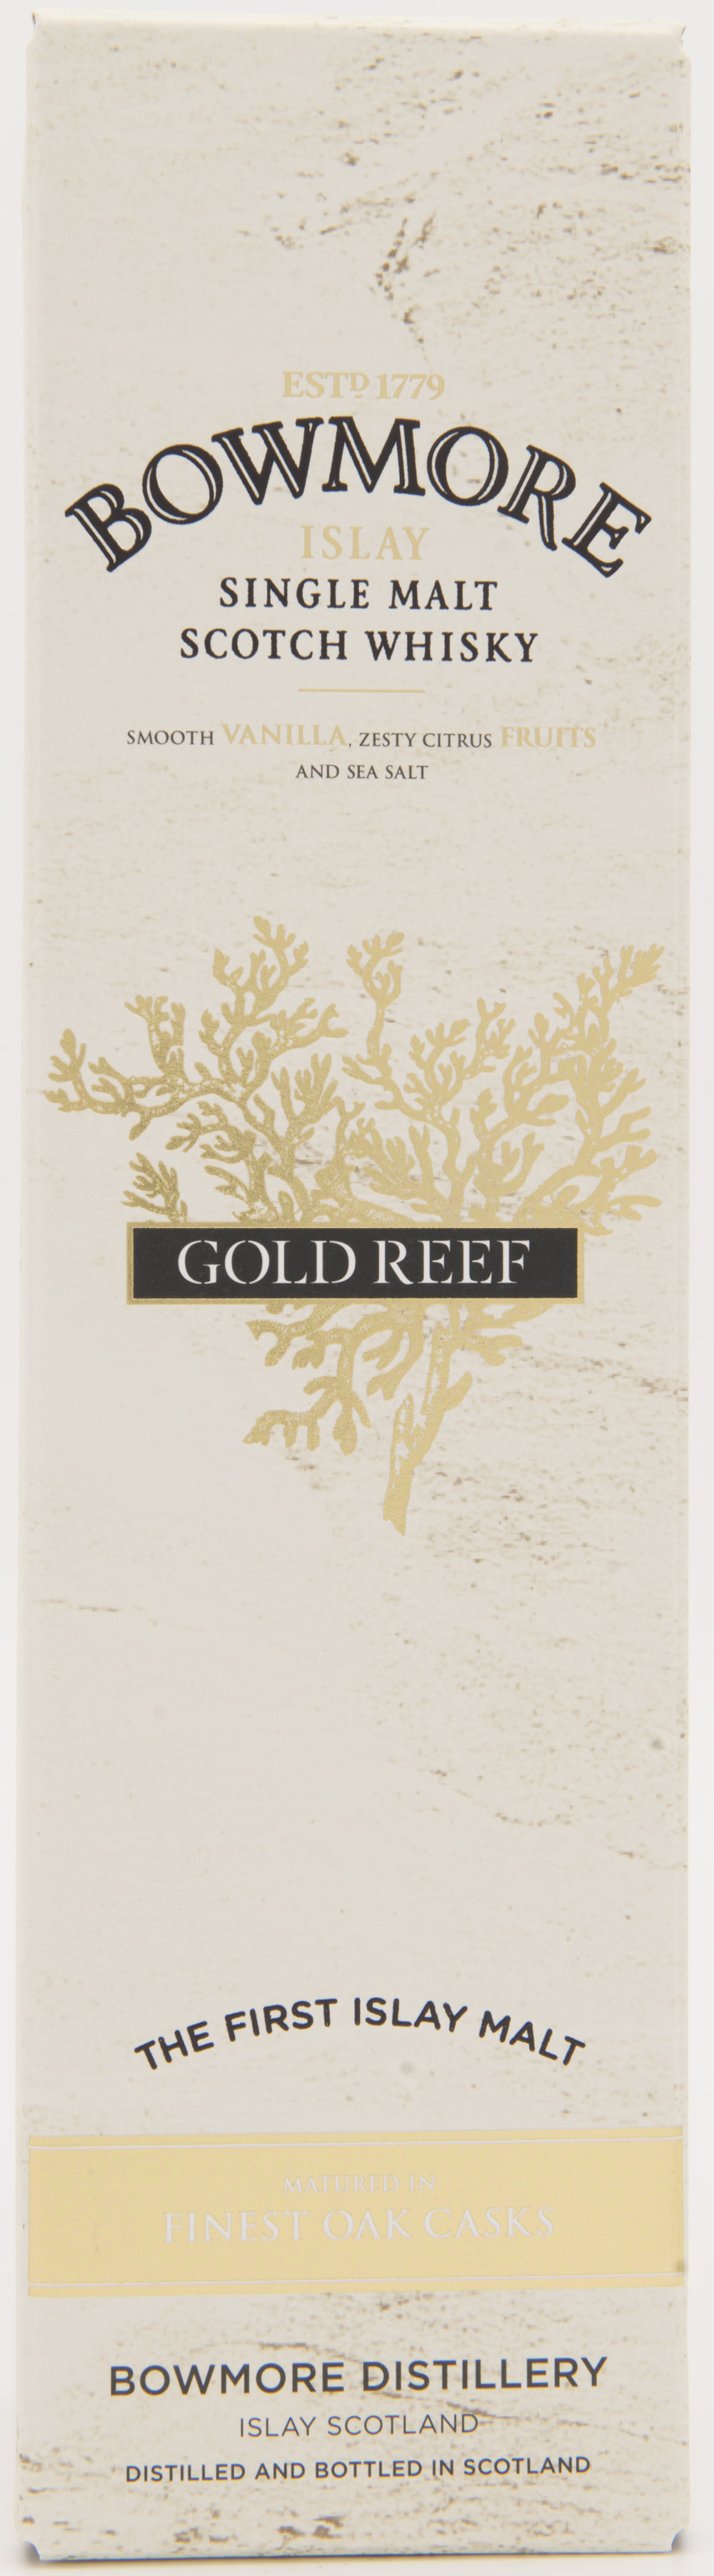 Billede: DSC_3850 Bowmore Gold Reef - box front.jpg